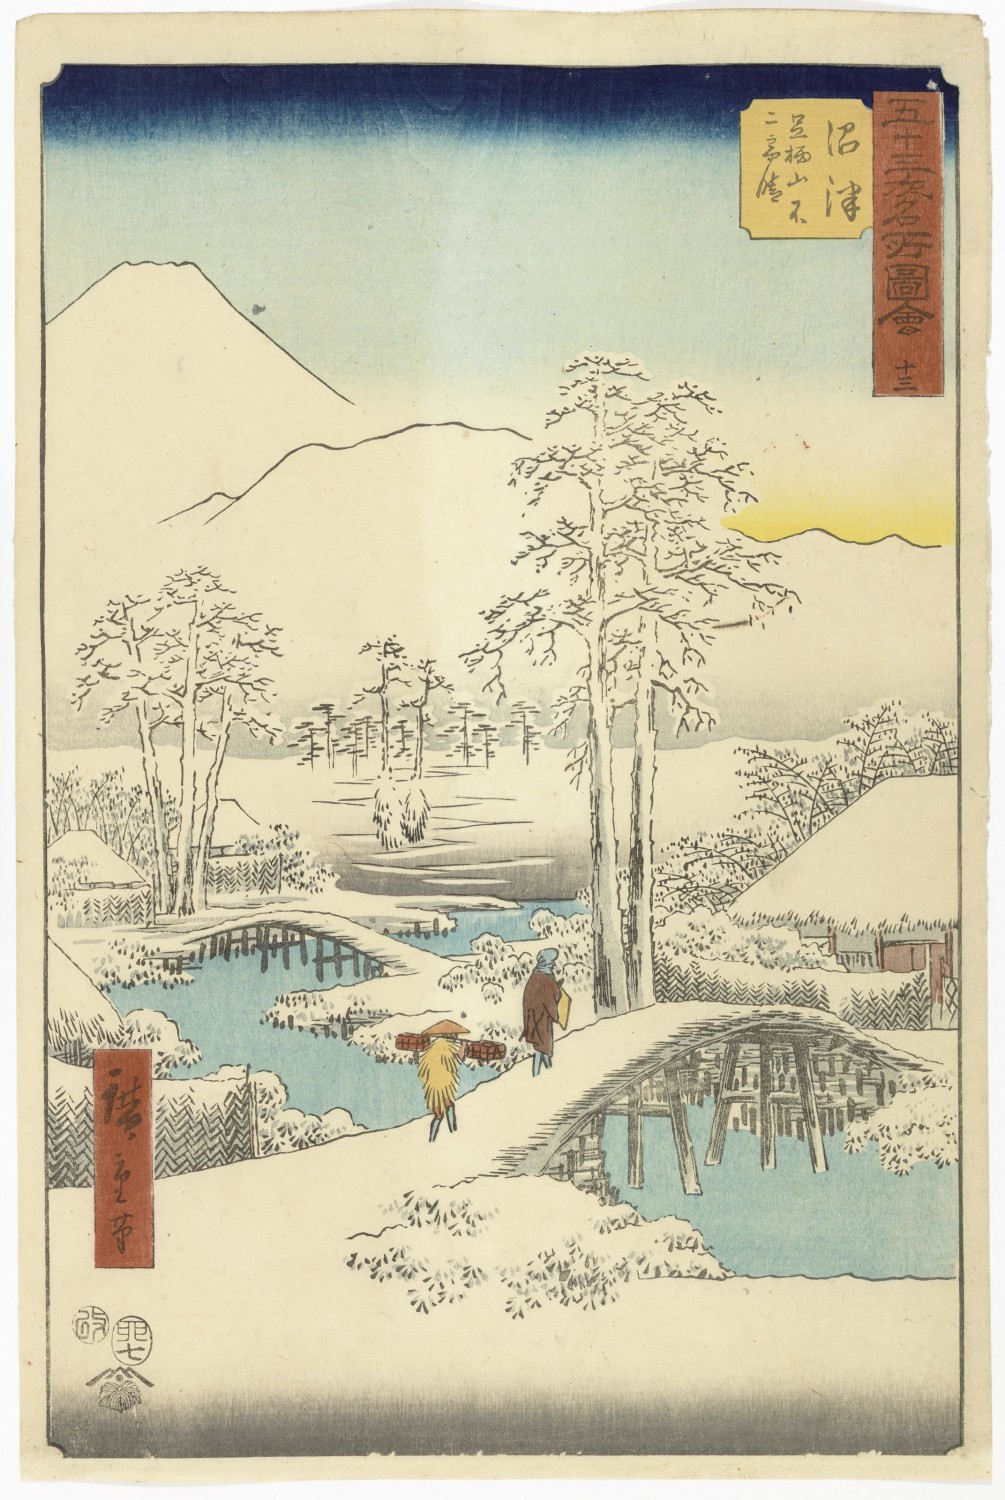 Ando Hiroshige, Numazu from Upright Tokaido